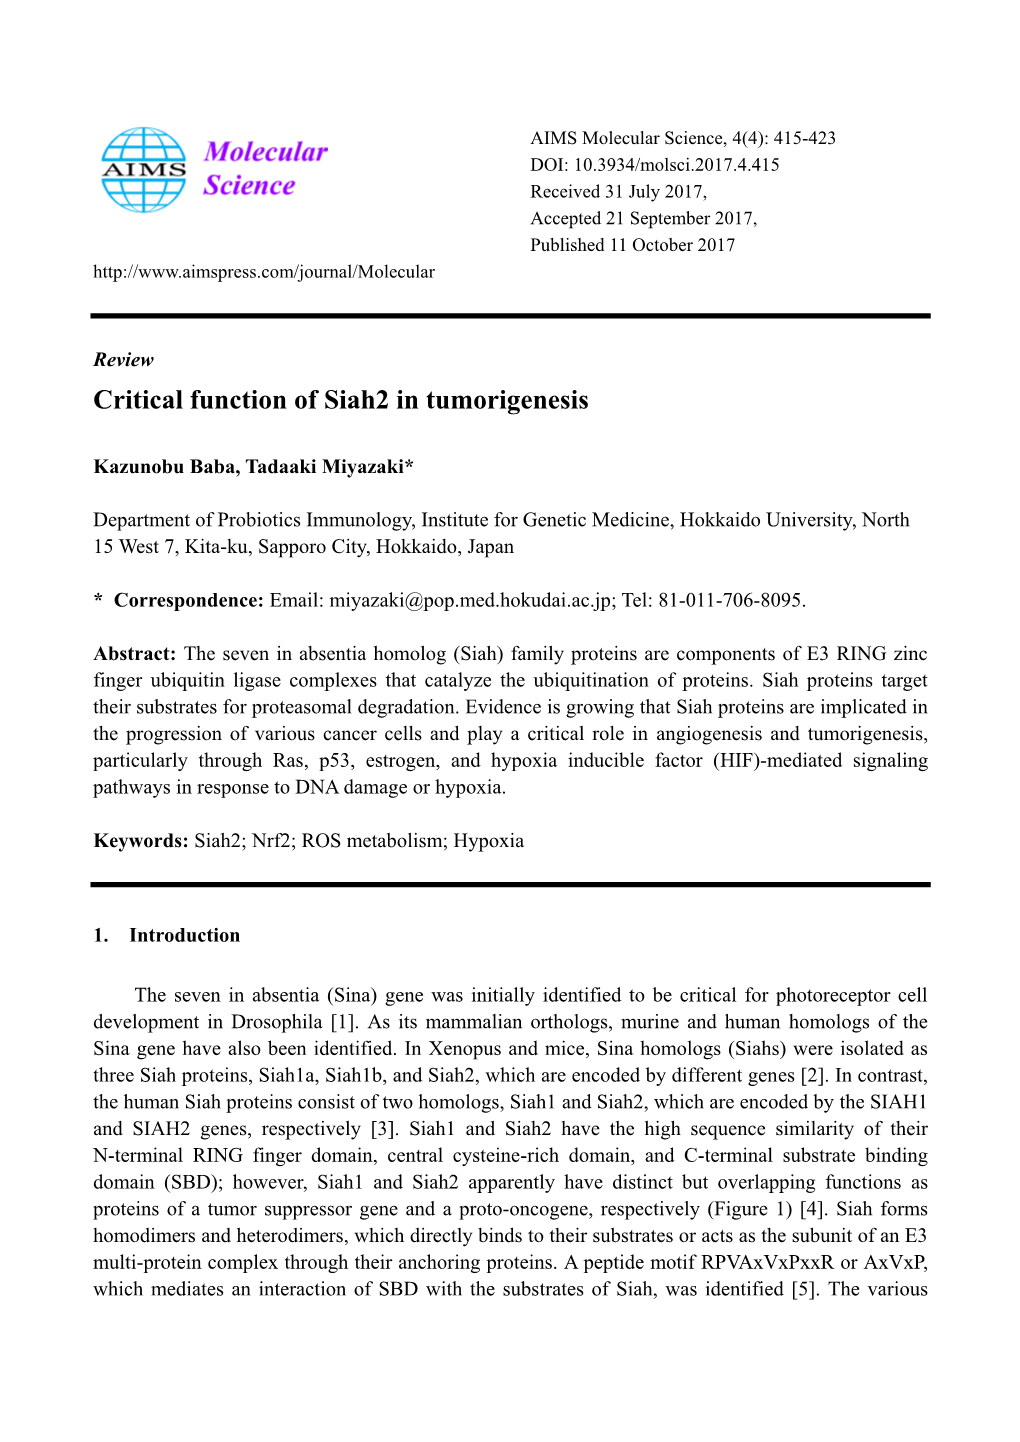 Critical Function of Siah2 in Tumorigenesis